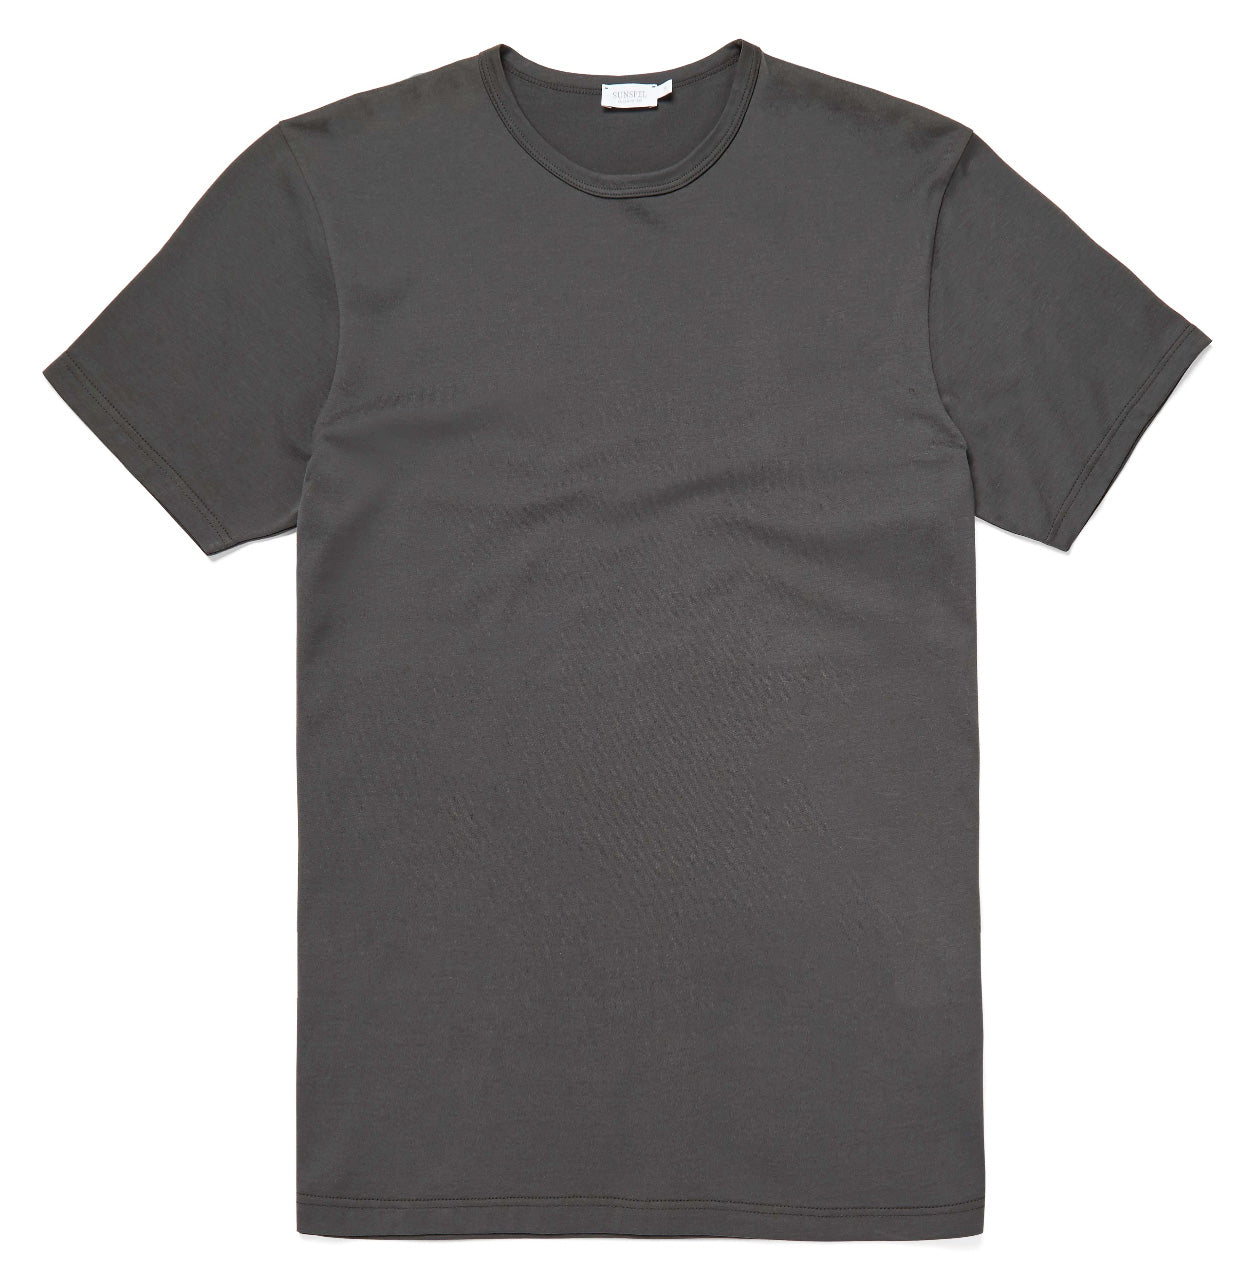 Sunspel Men's Classic Cotton T-Shirt in Charcoal